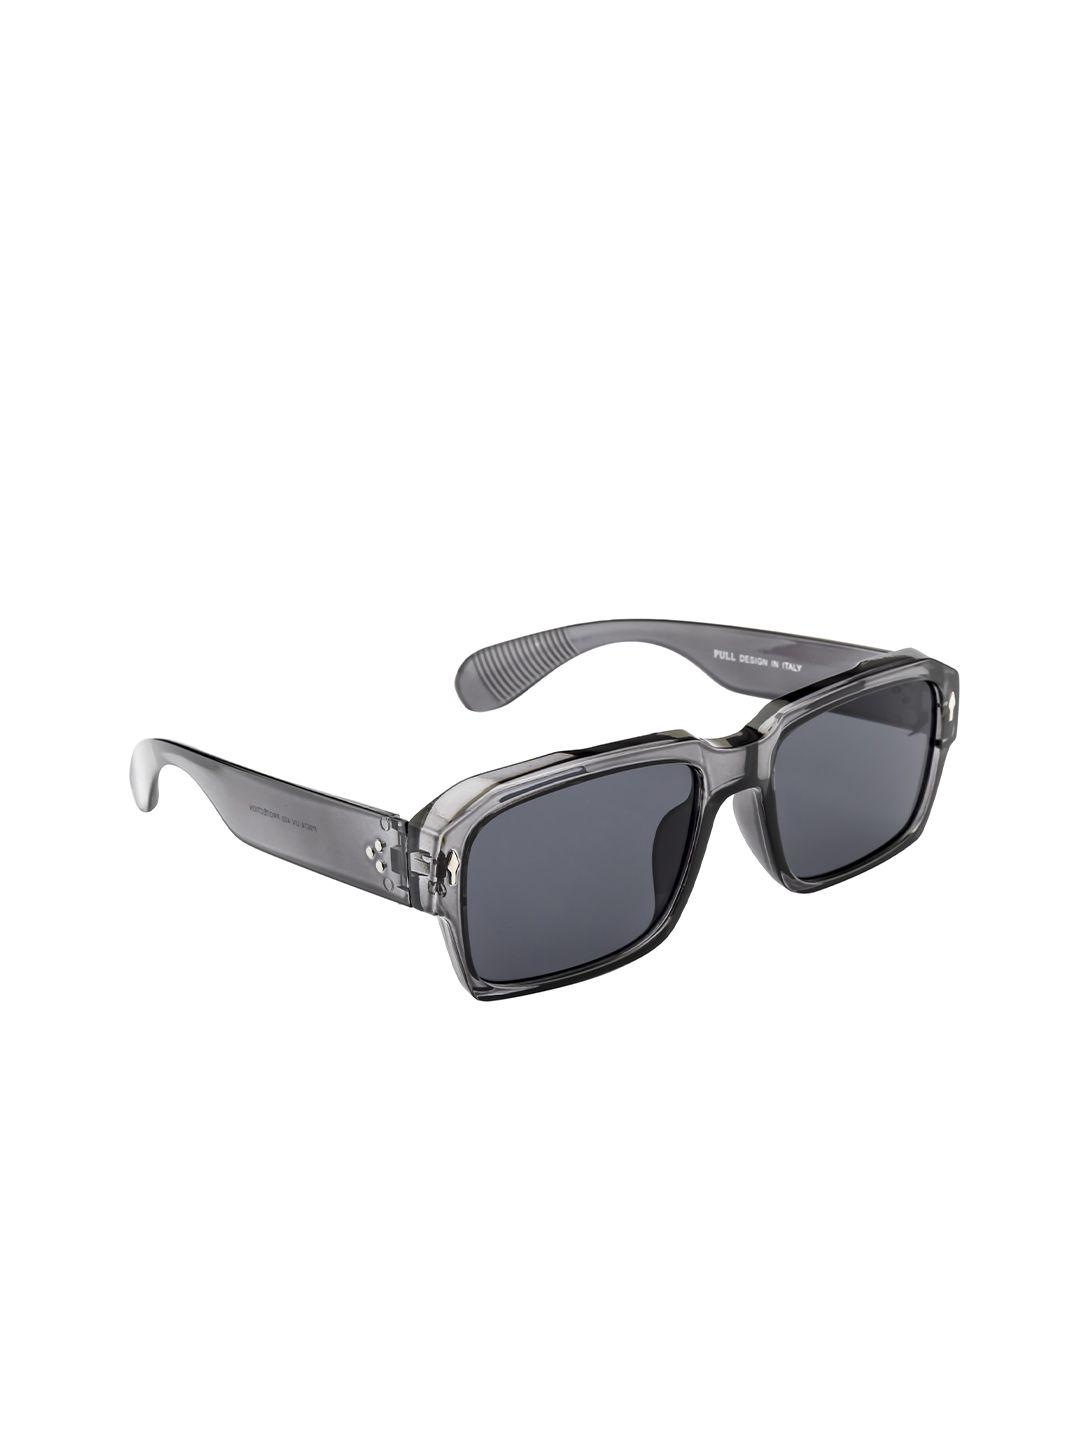 roadster unisex wayfarer sunglasses with uv protected lens-rd-p9674-c3